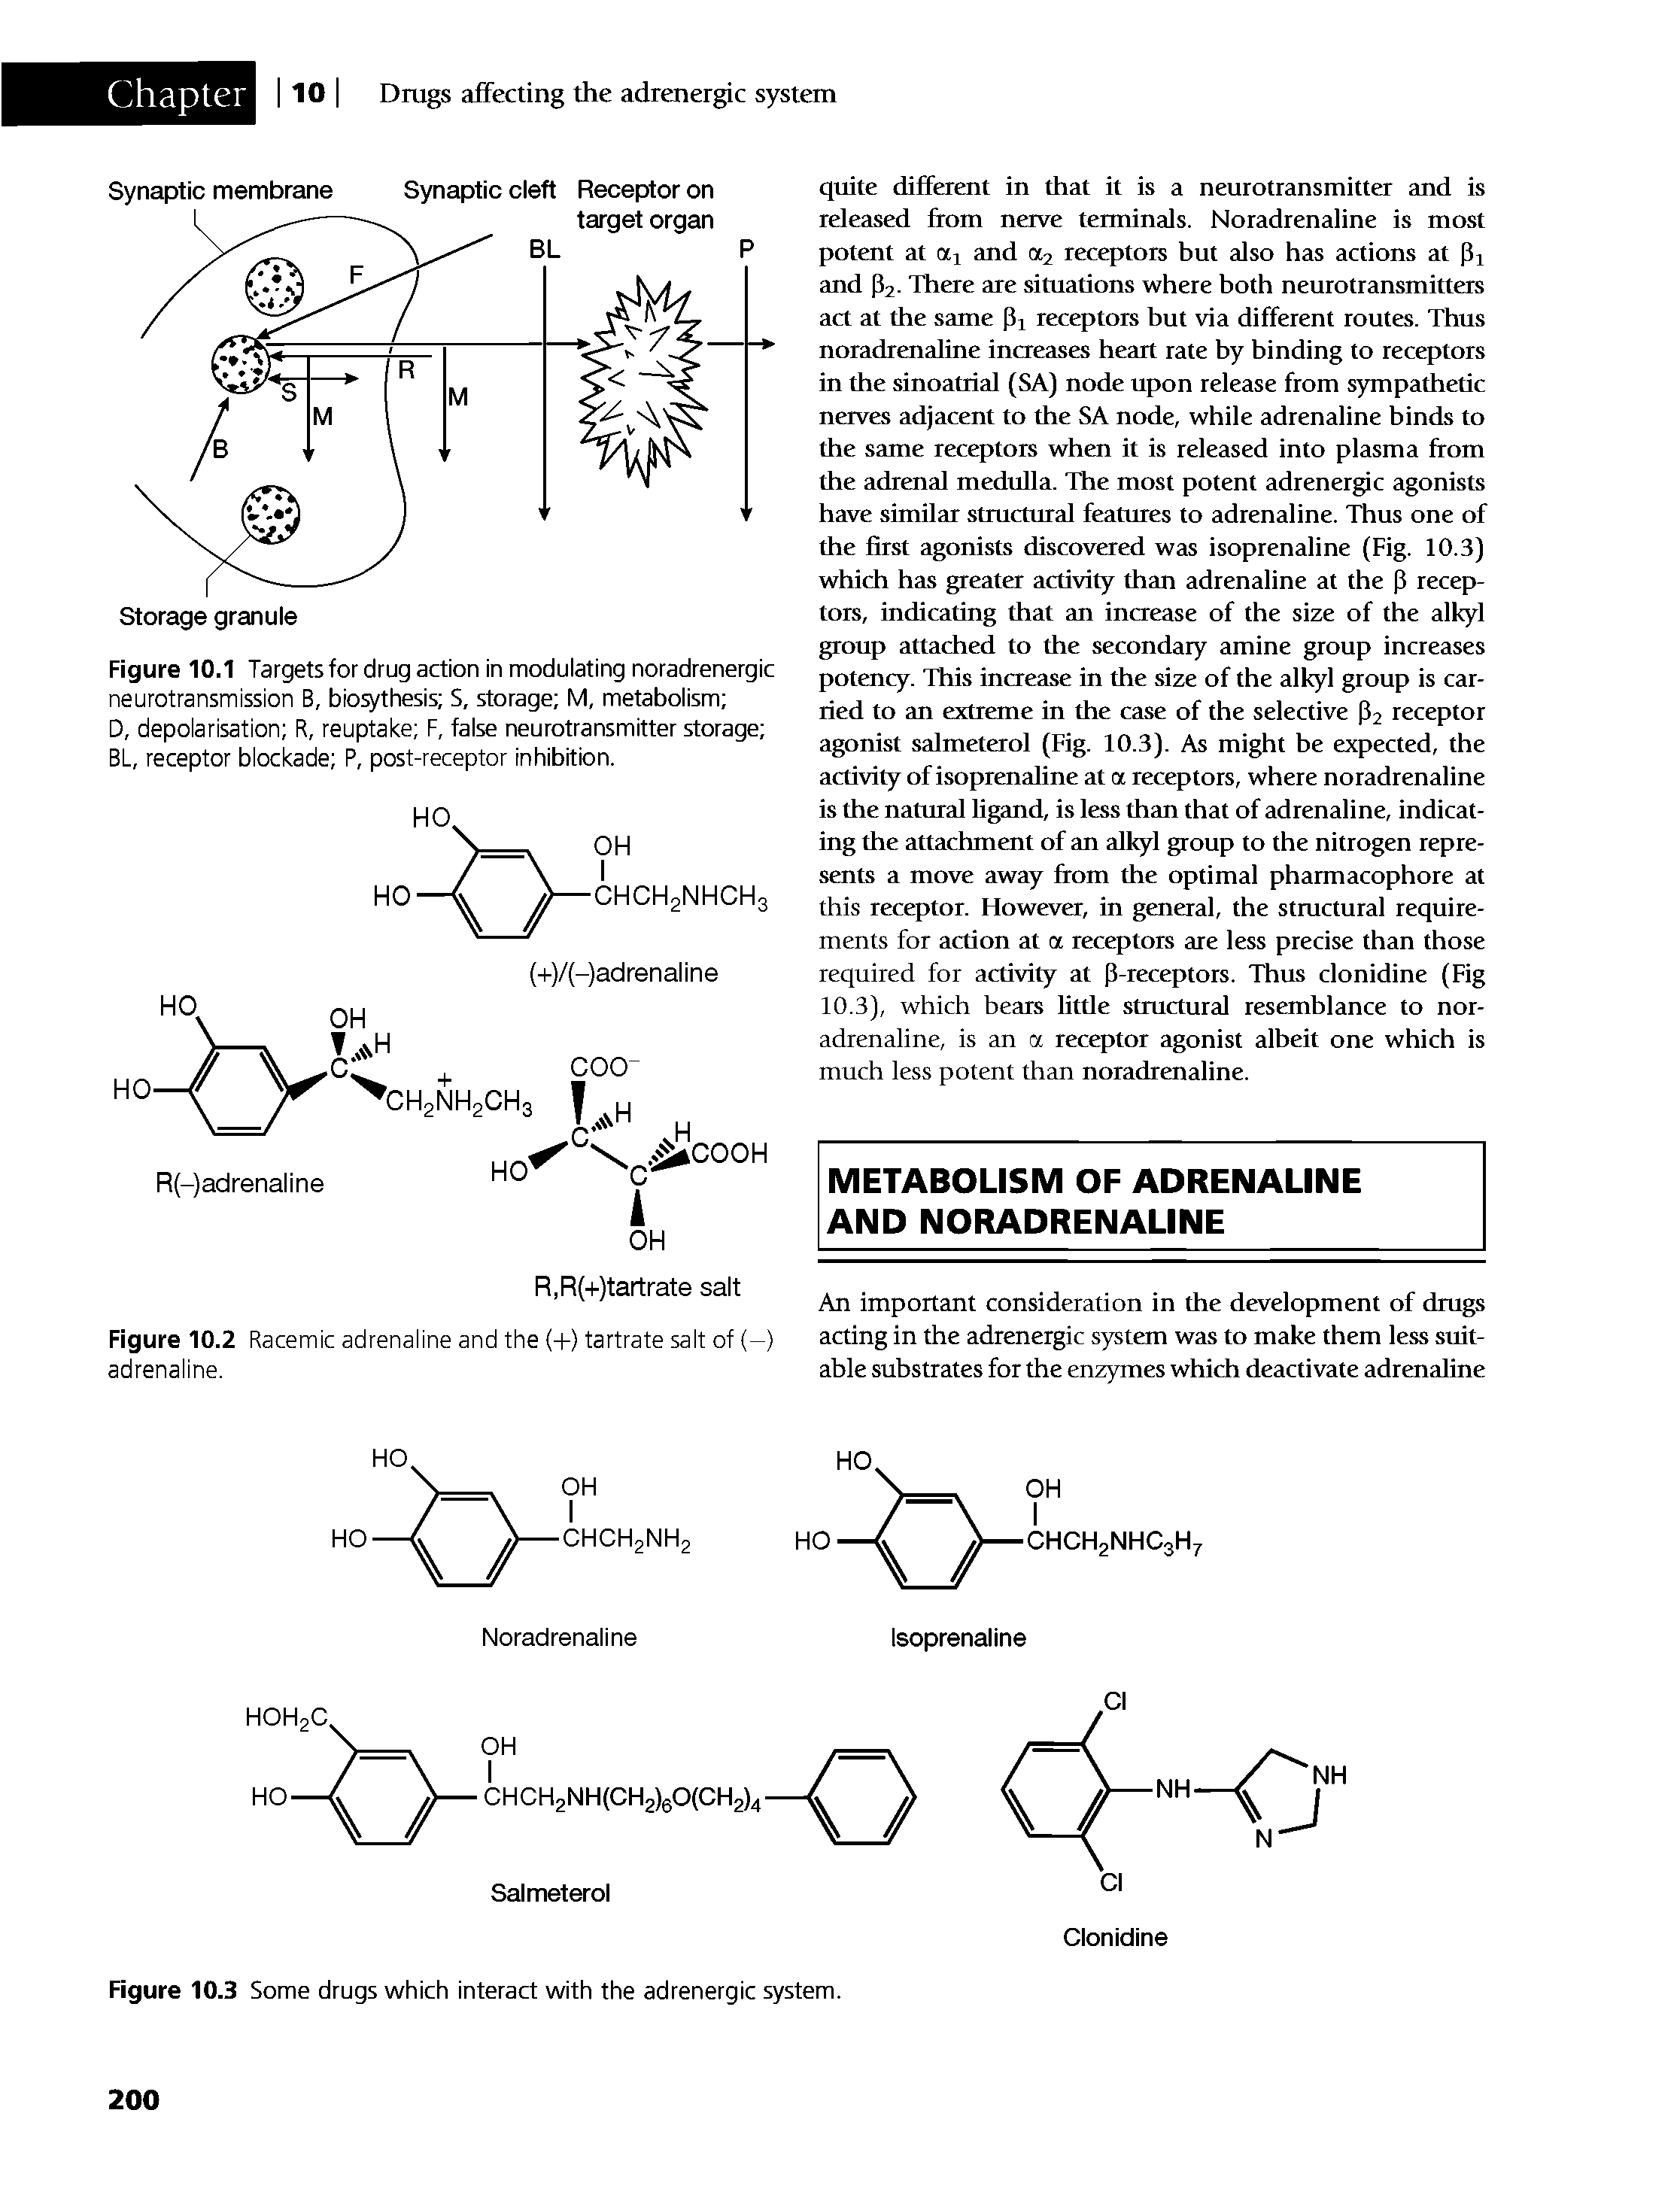 Figure 10.2 Racemic adrenaline and the (-F) tartrate salt of (-) adrenaline.